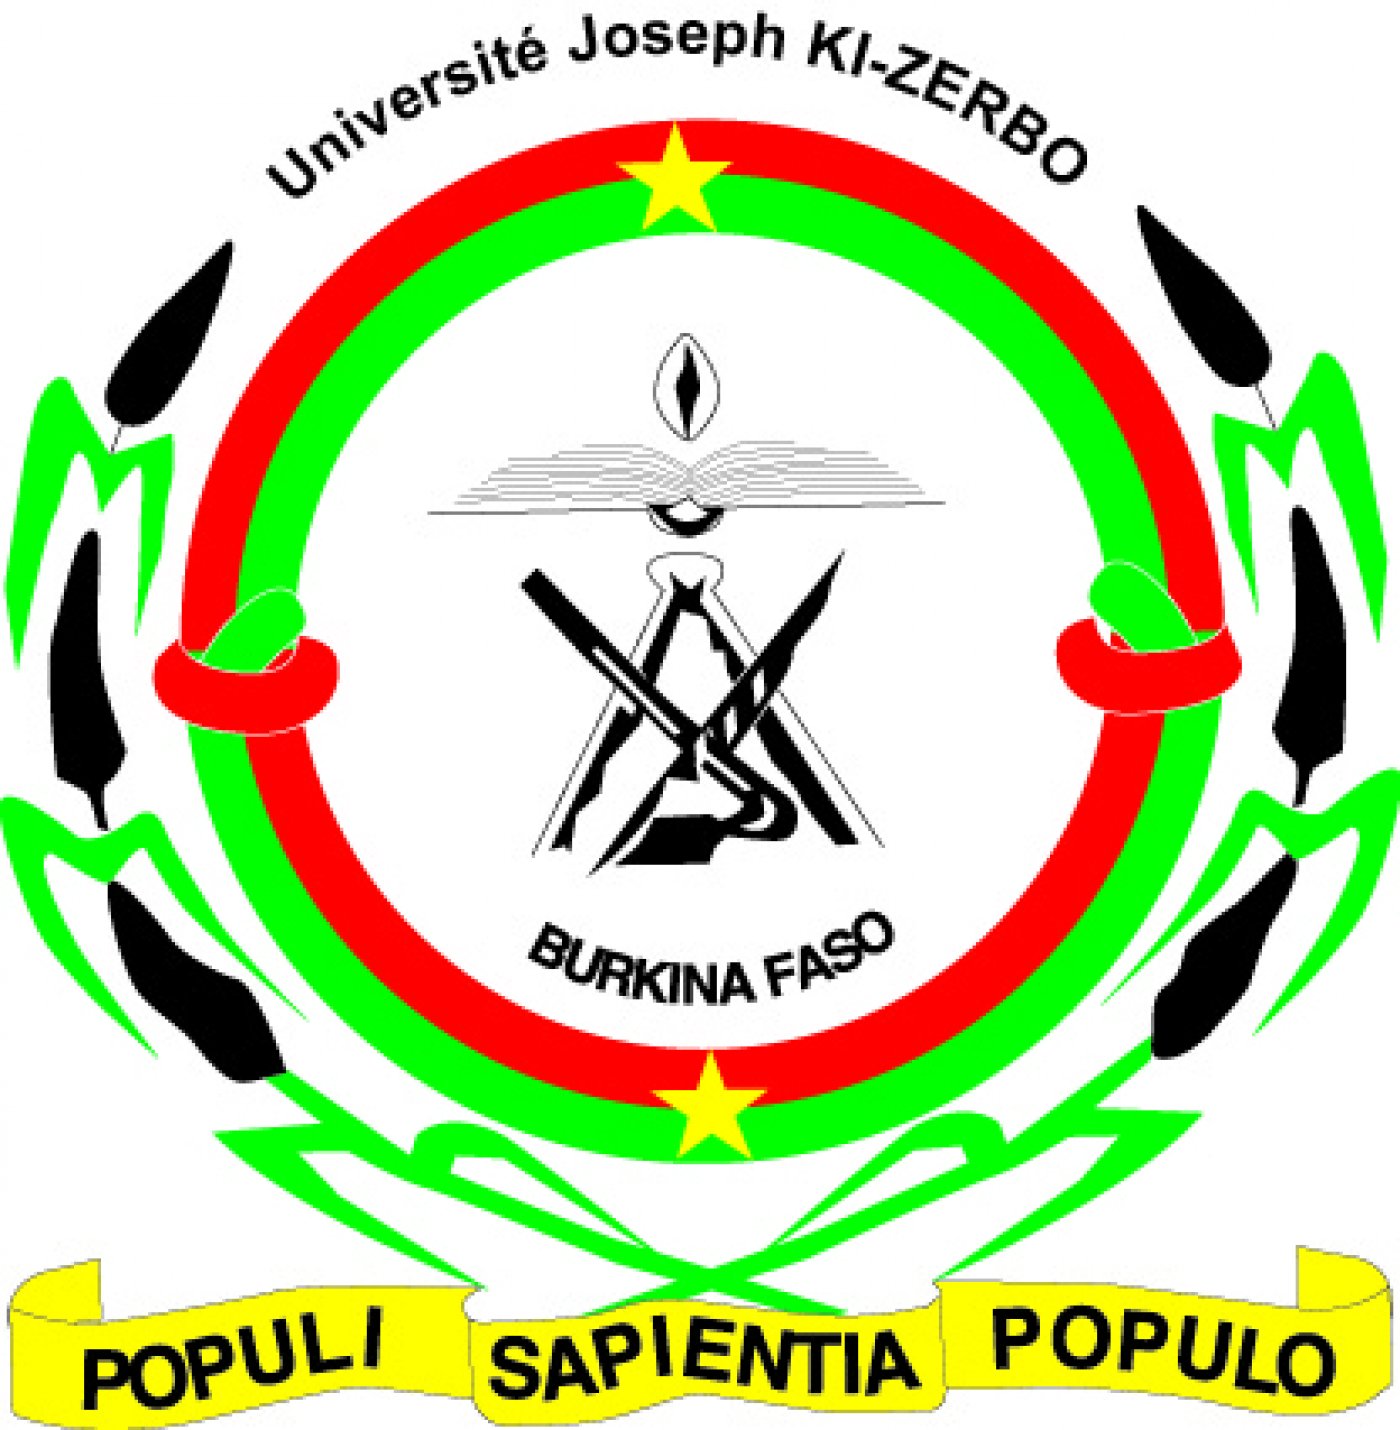 Université Joseph Ki-Zerbo